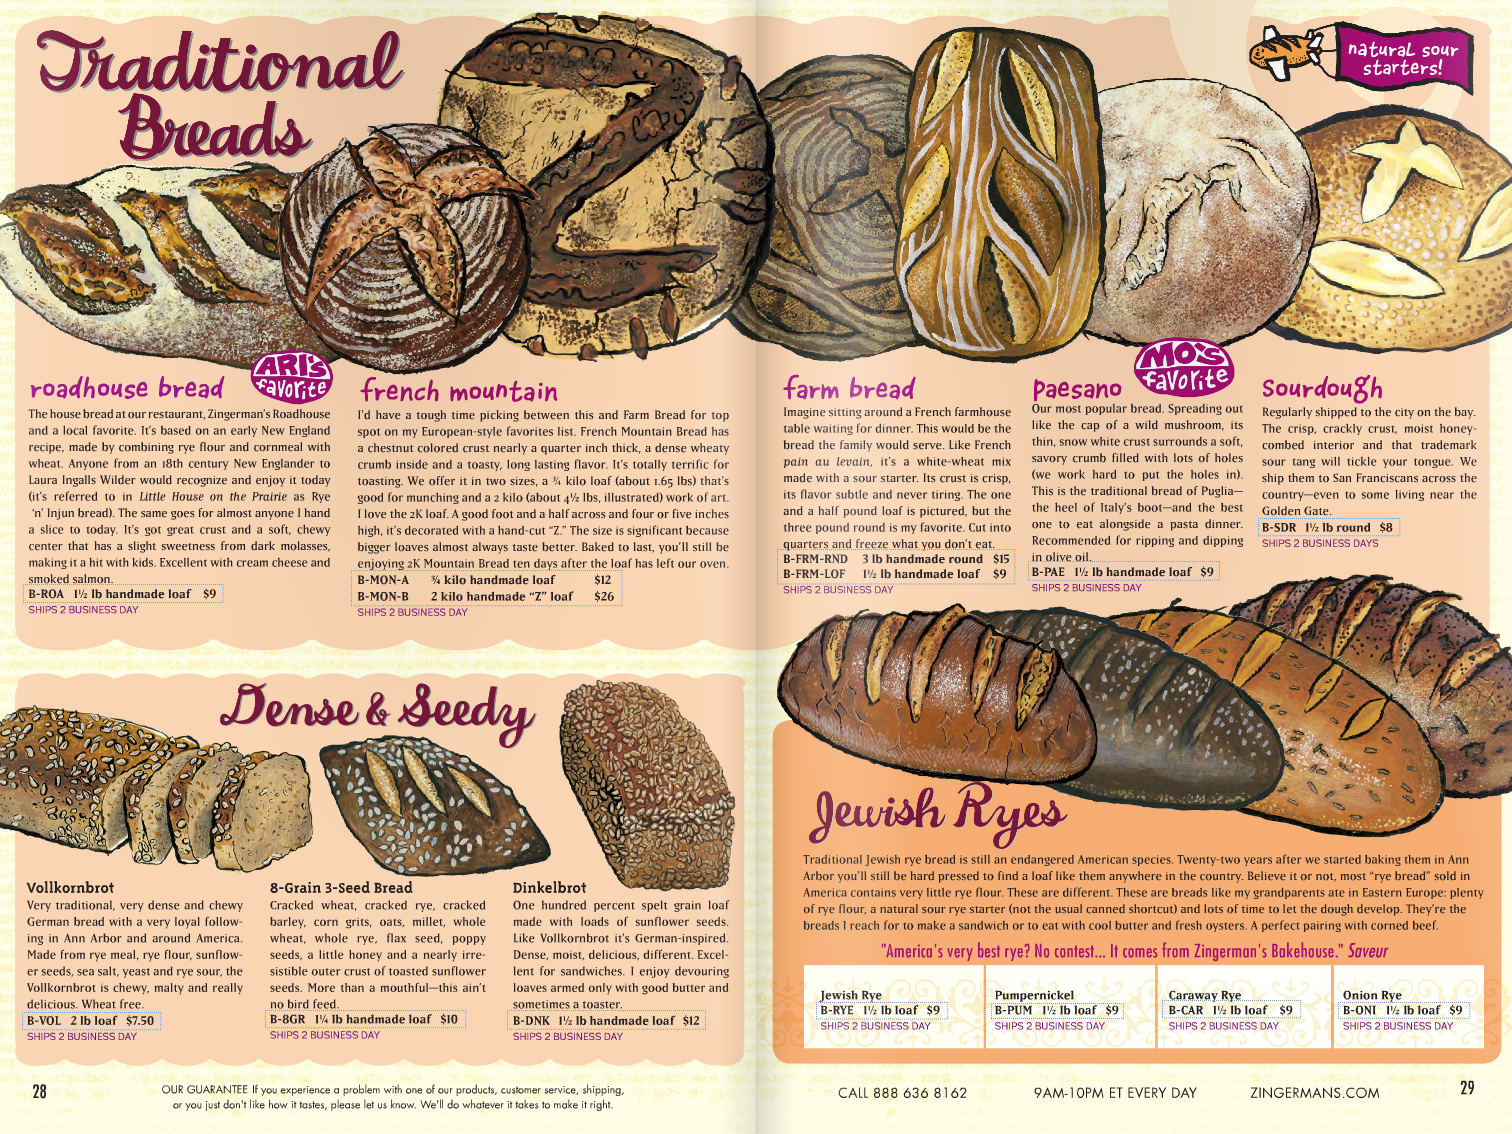 Zingerman’s Catalog - Breads